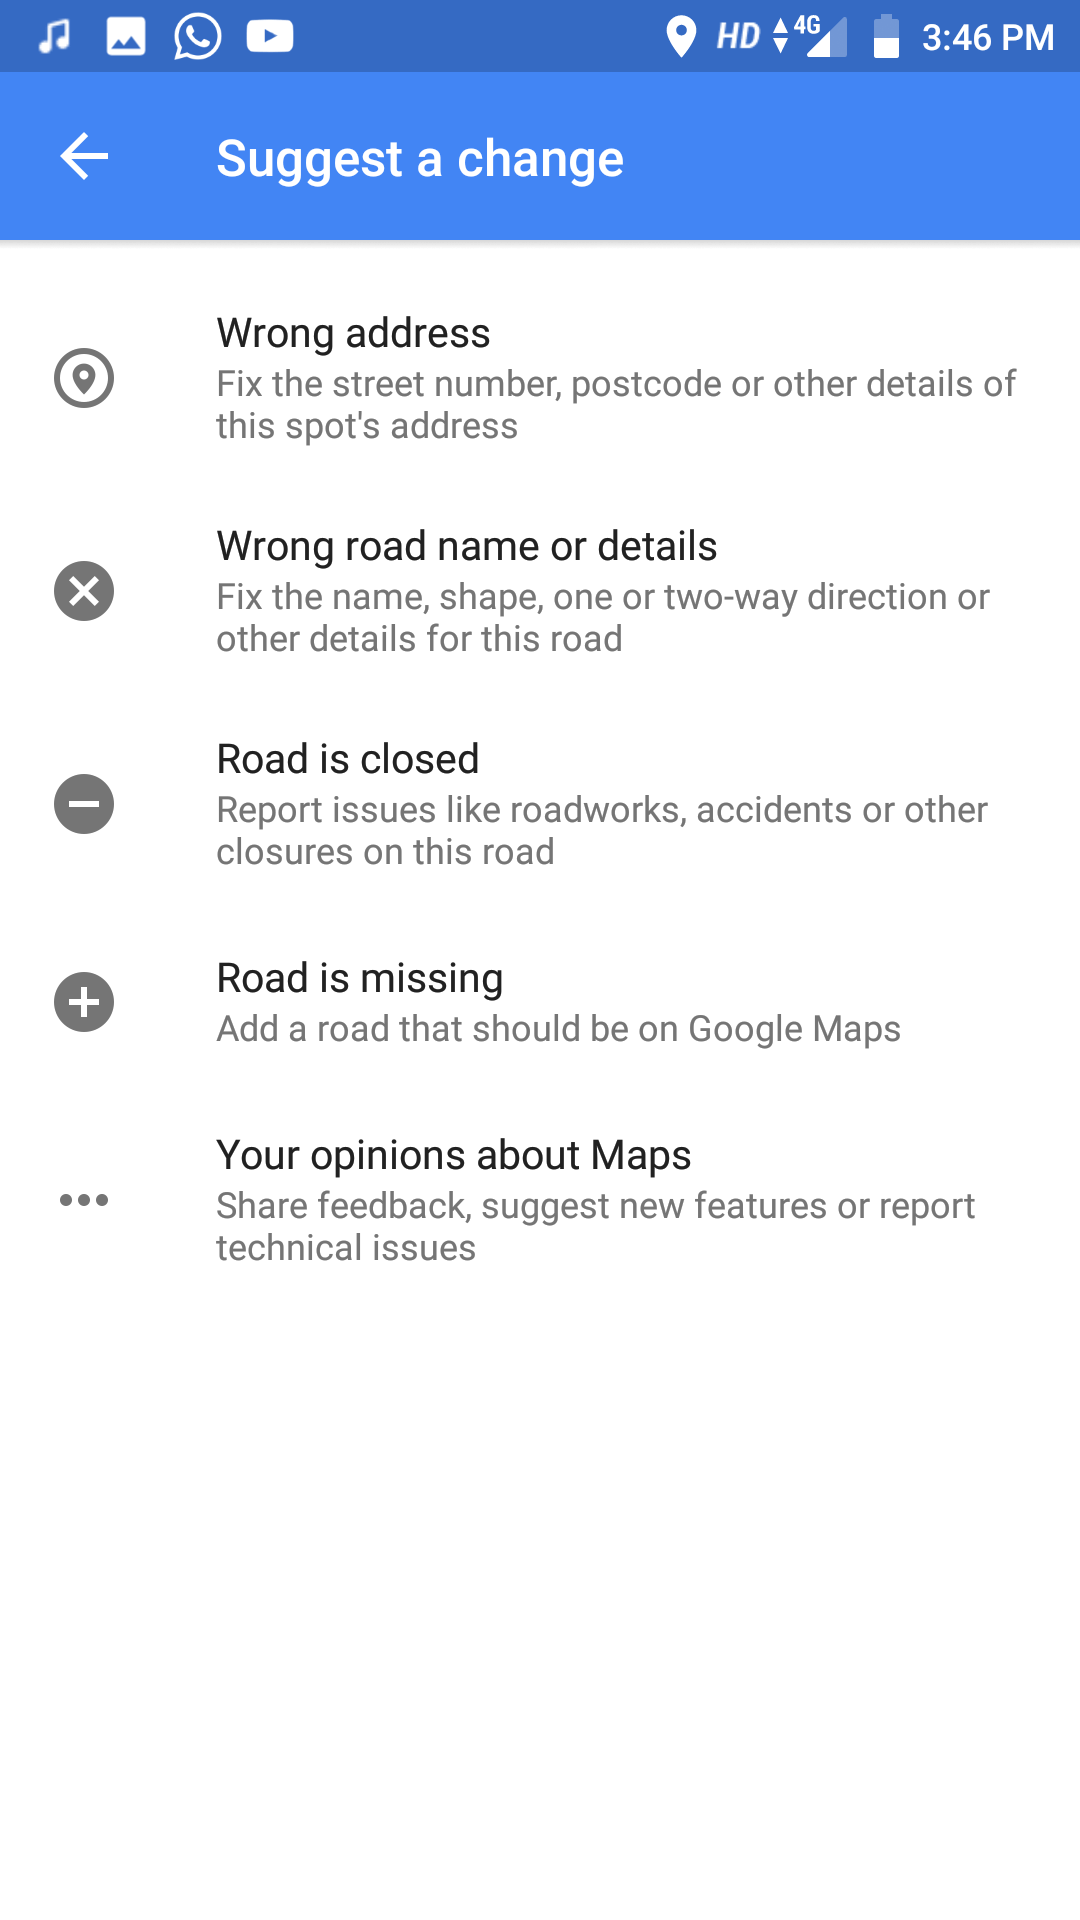 Update Google Maps